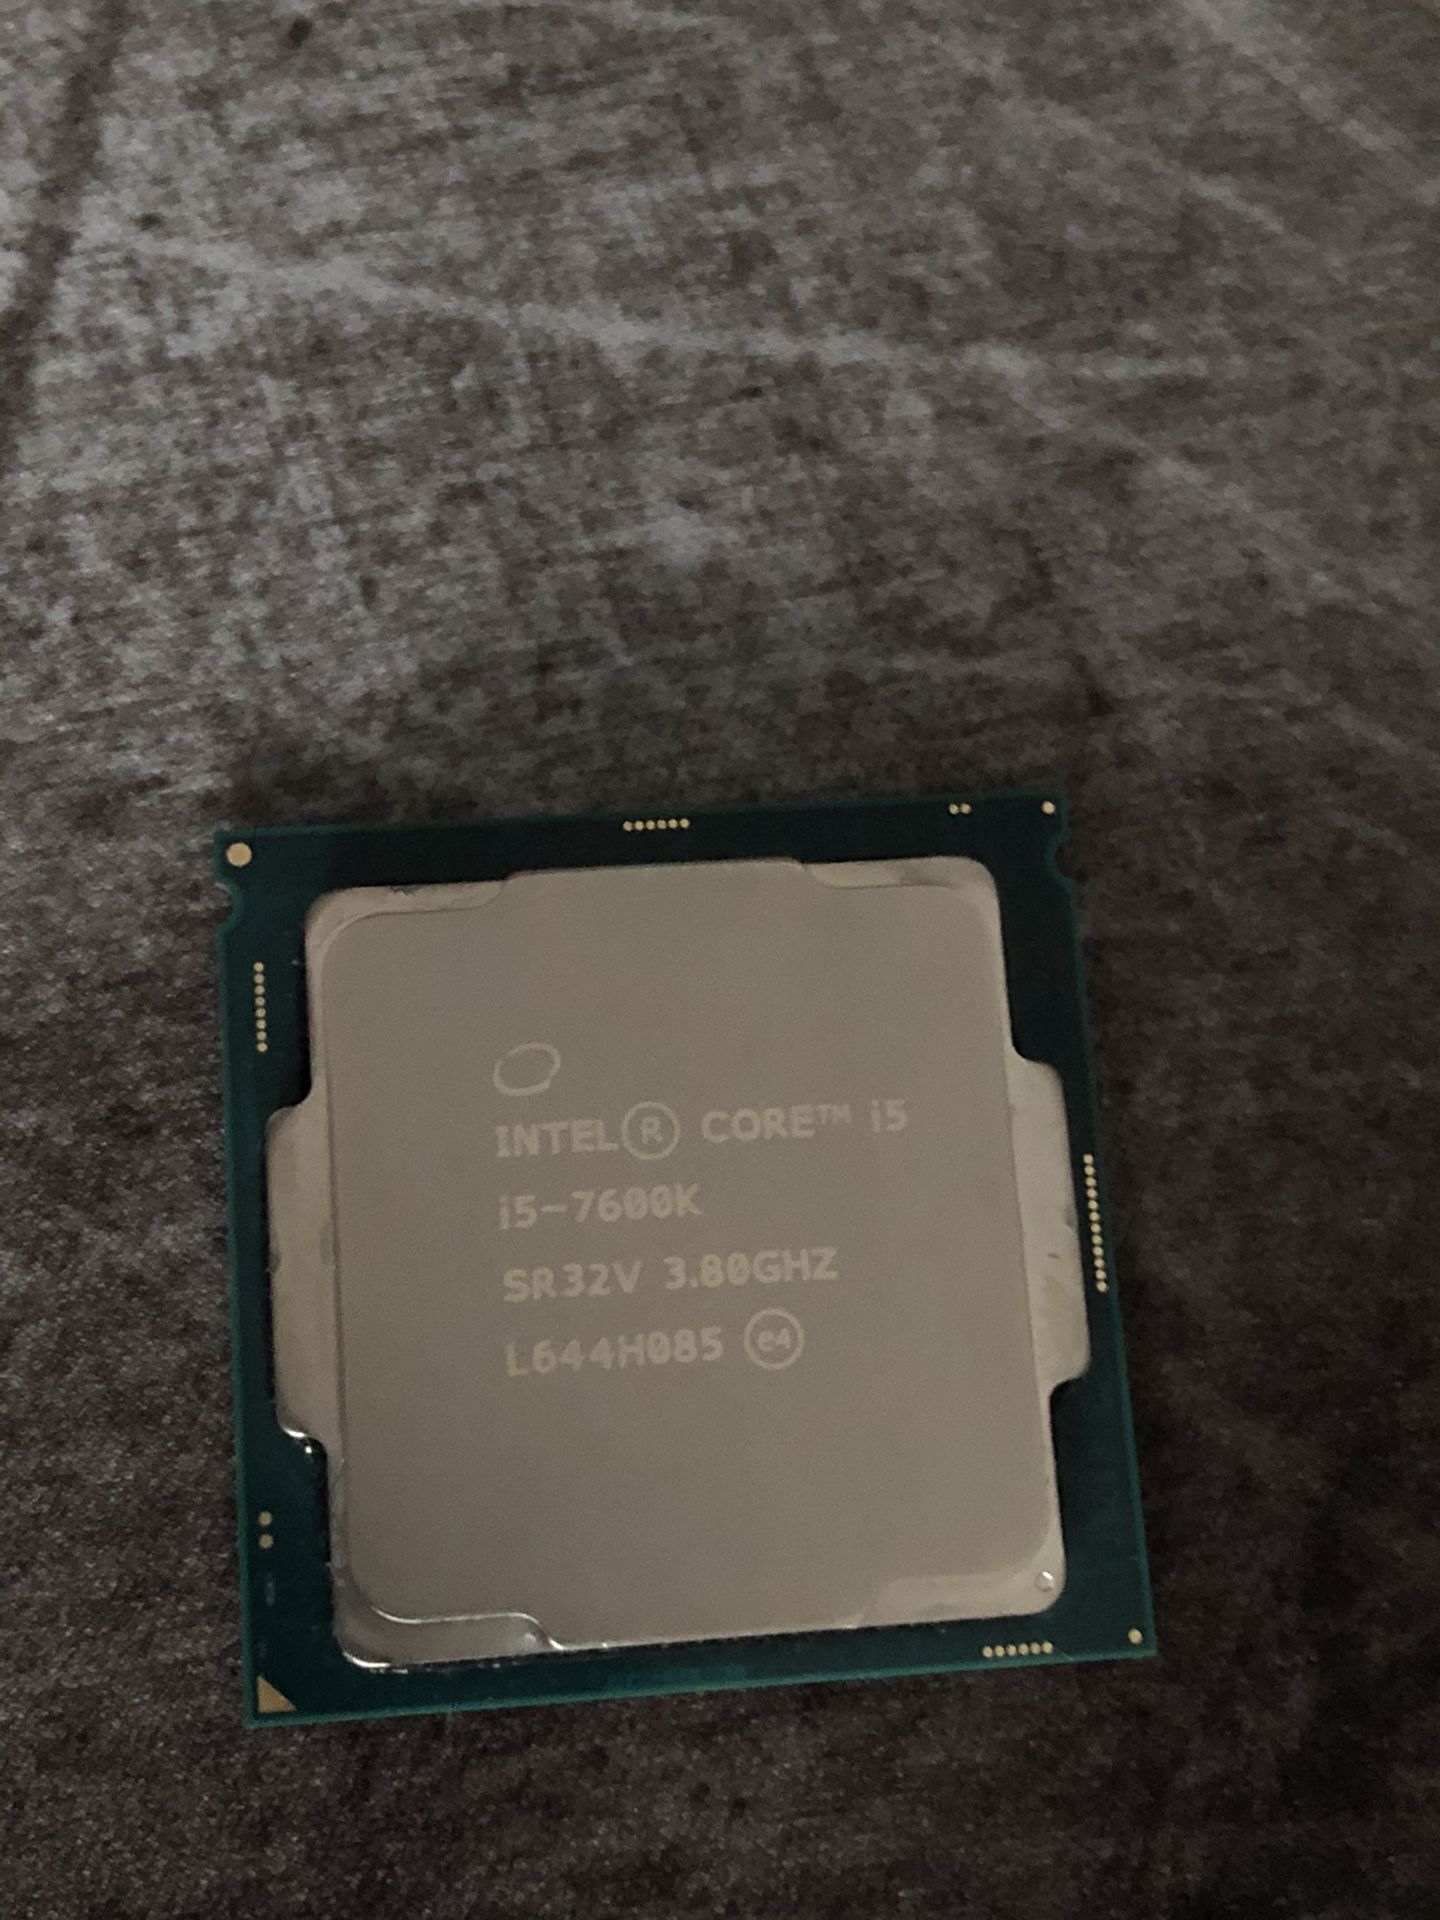 Intel Core i5-7600k